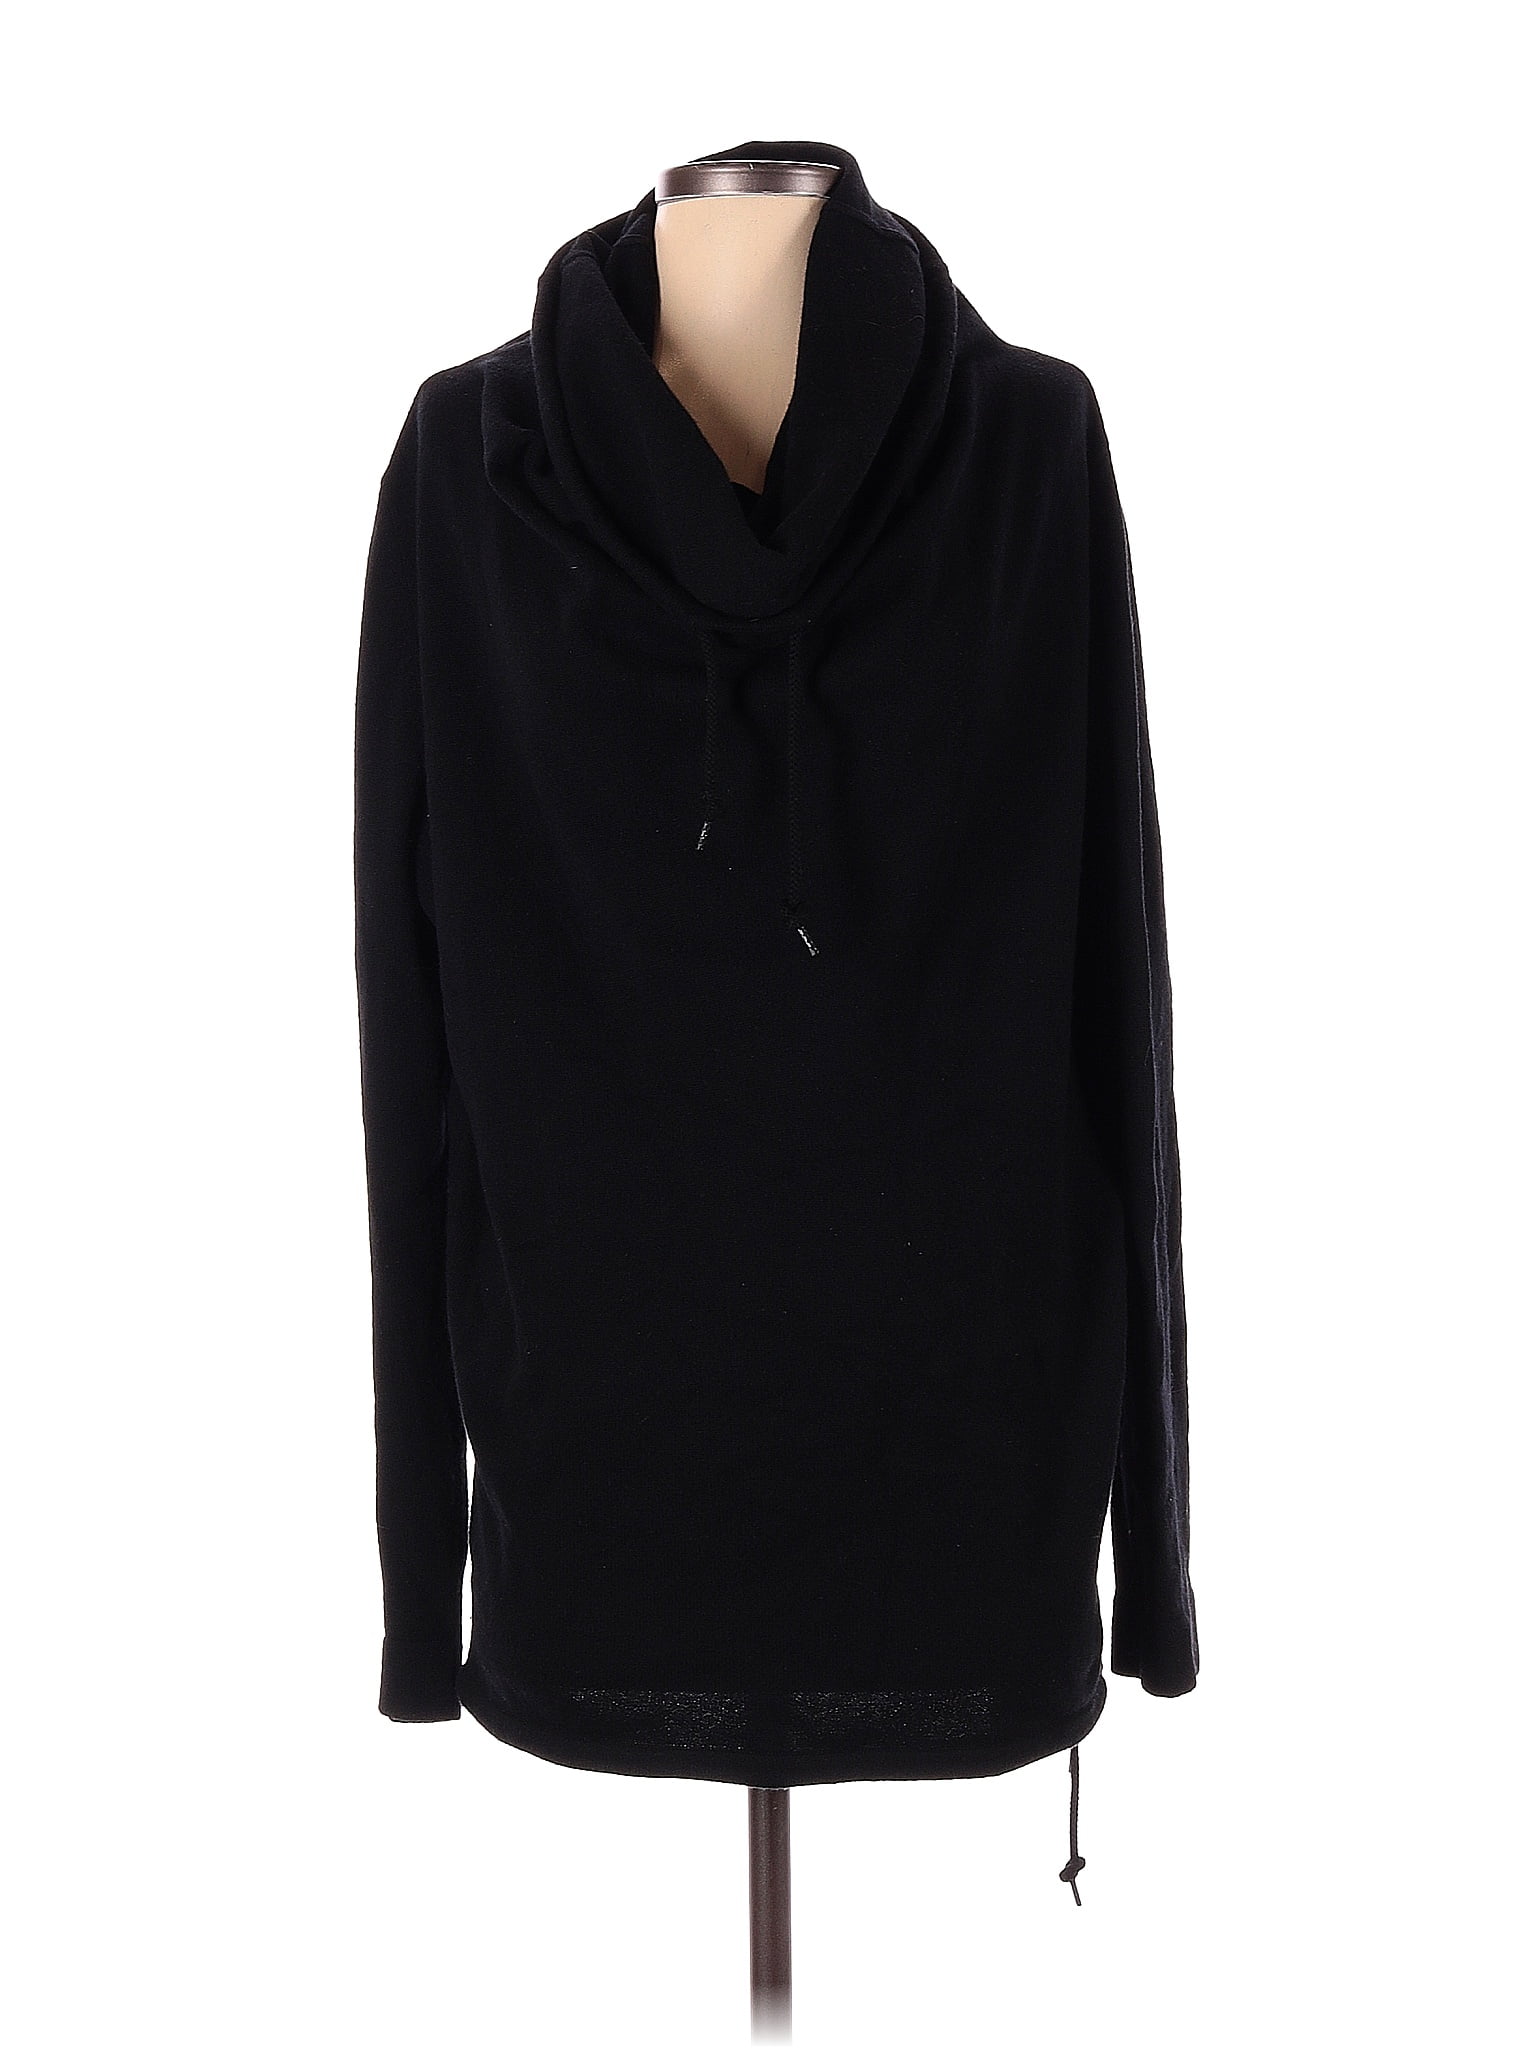 Akris Punto Black Pullover Sweater Size 4 - 84% off | thredUP